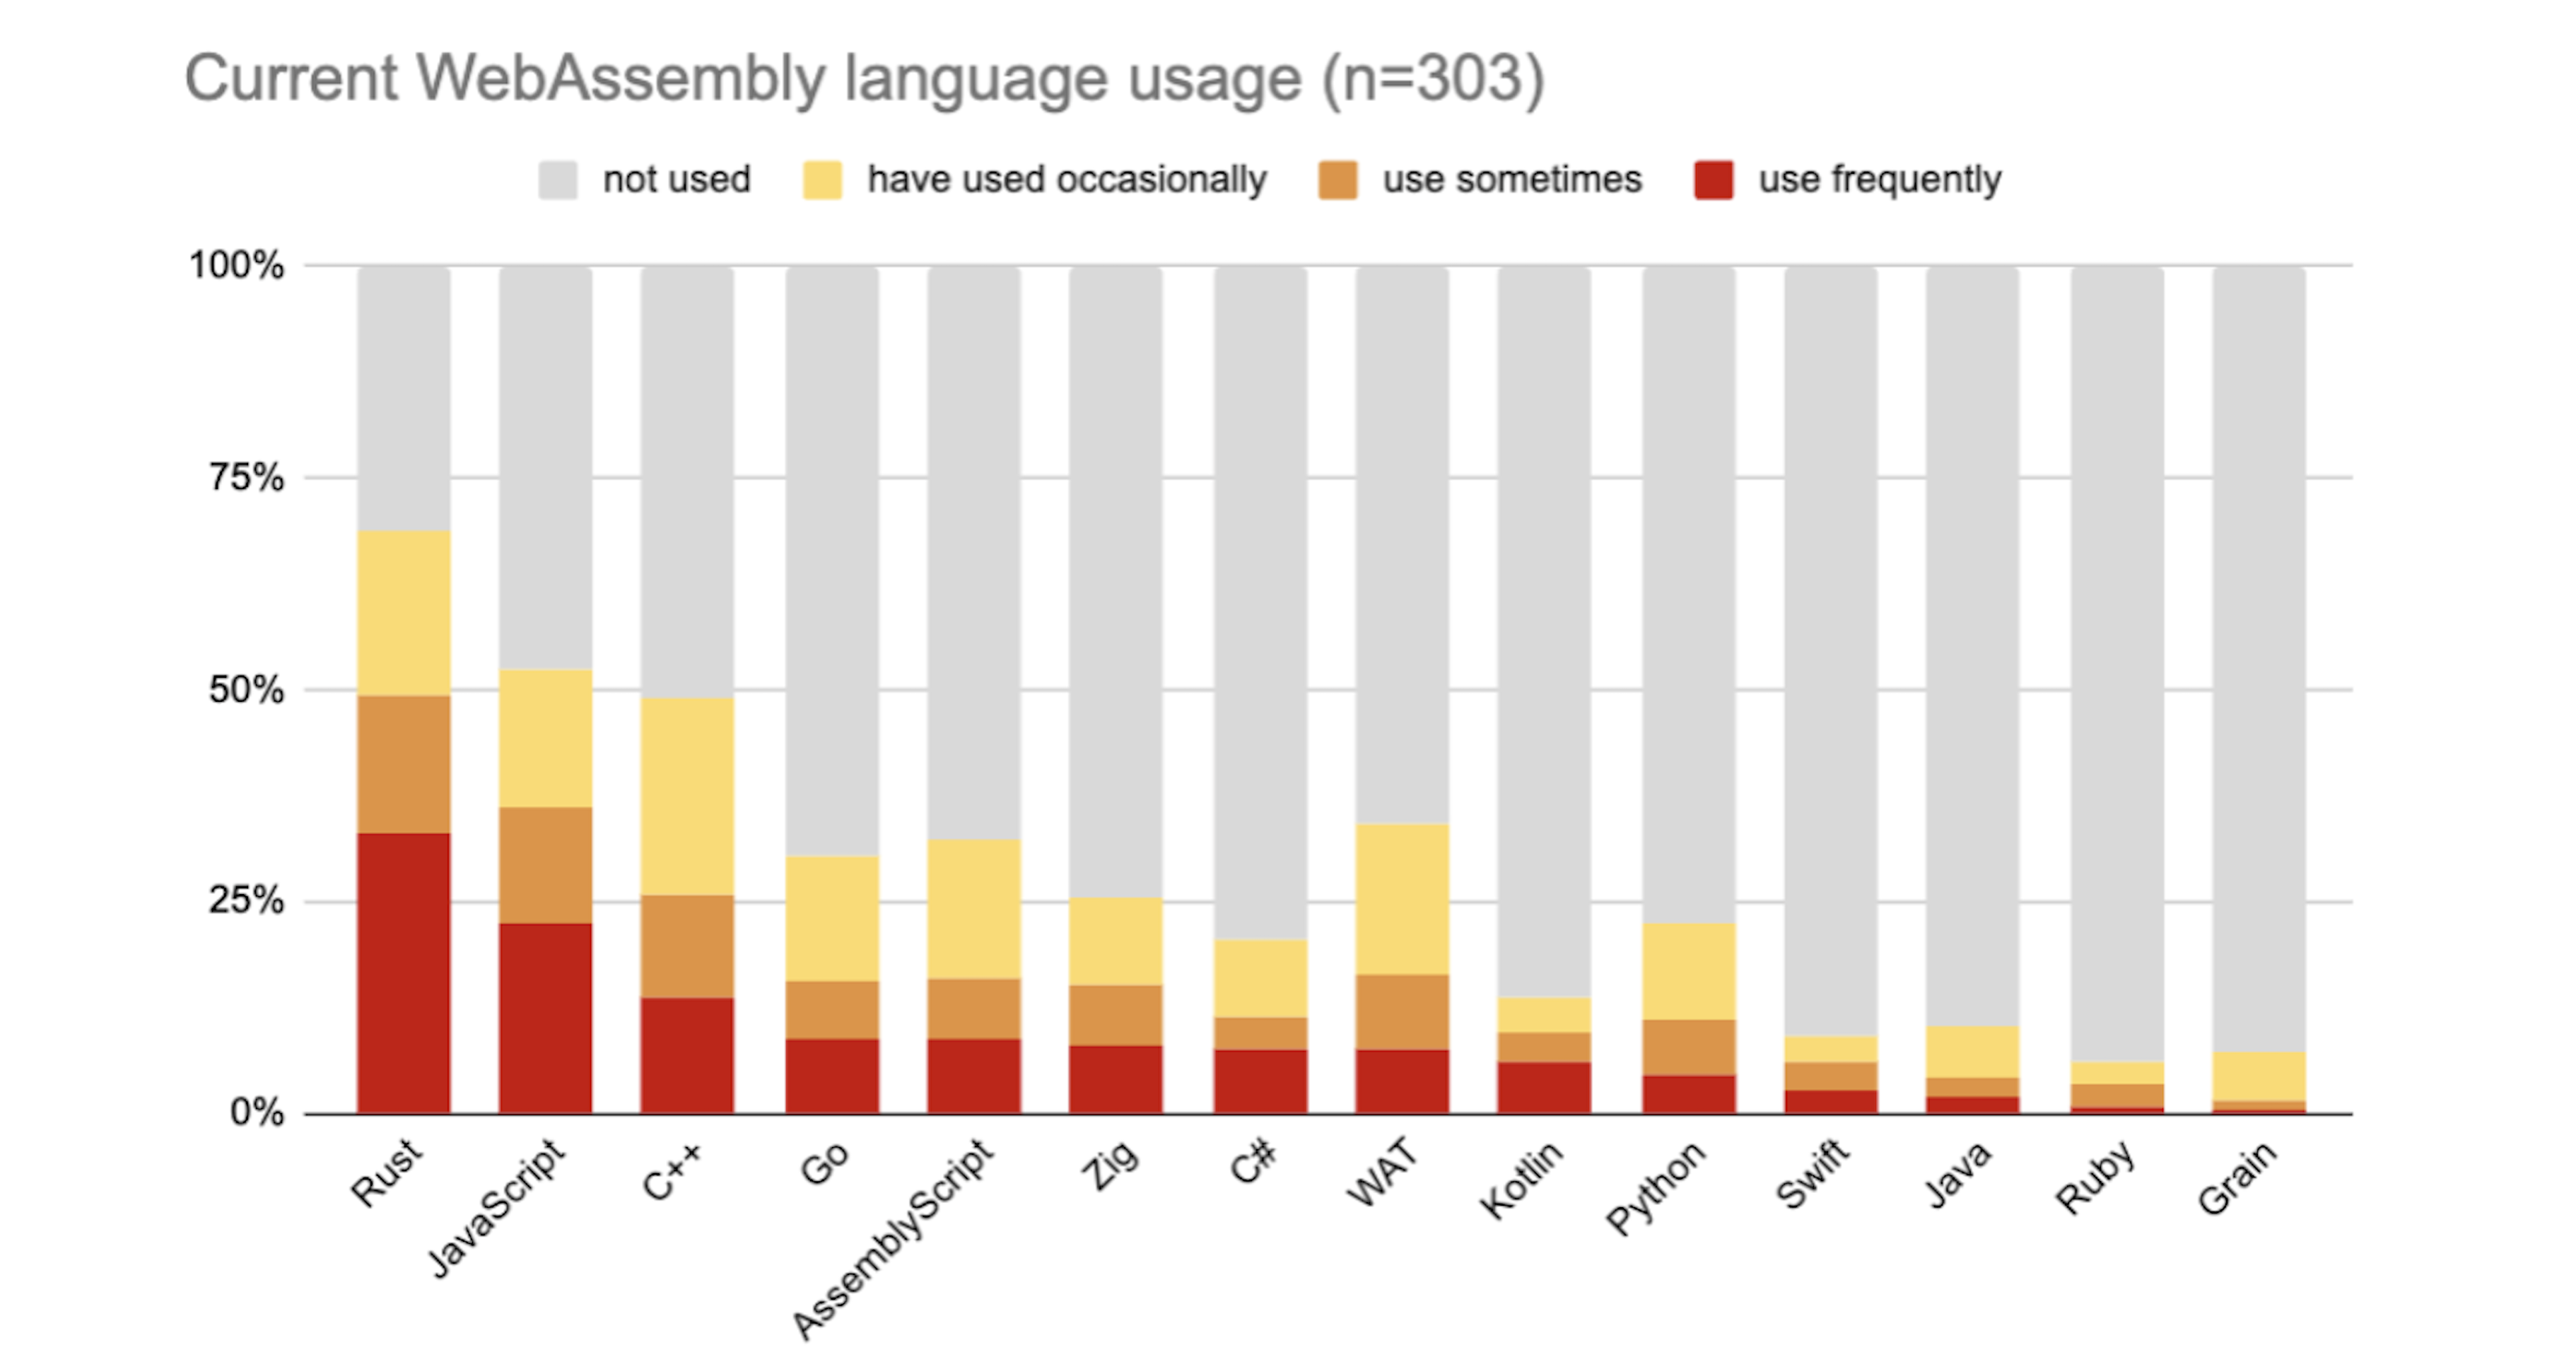 Languages used in WebAssembly according to Scott Logic 2023 survey